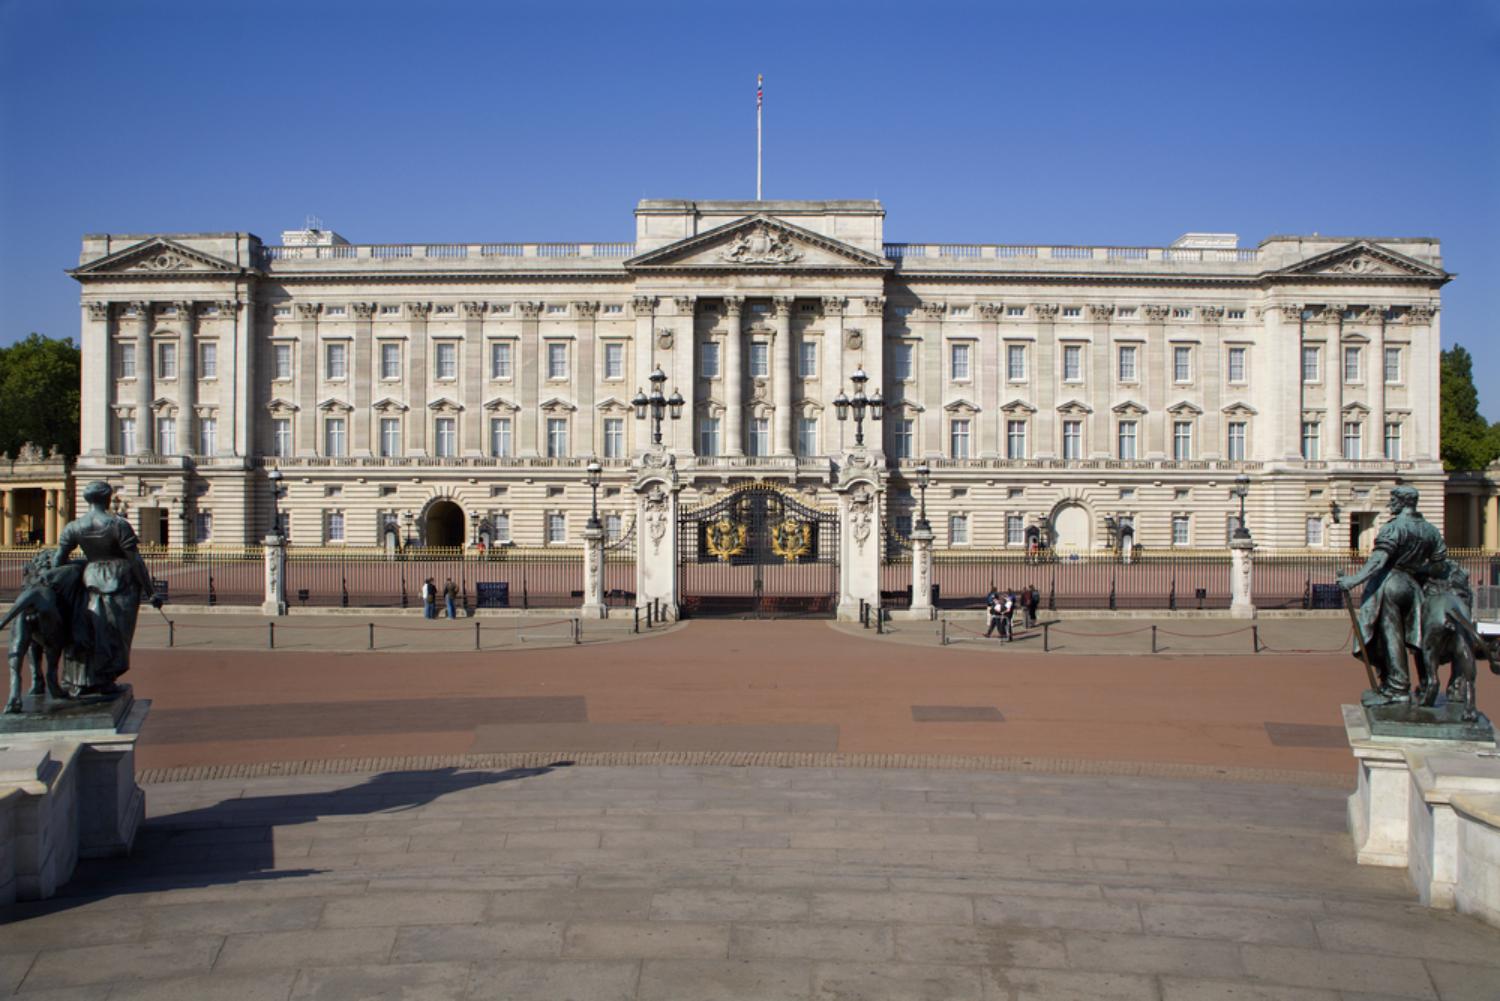 Visite de Buckingham Palace et du château de Windsor - Coupe file